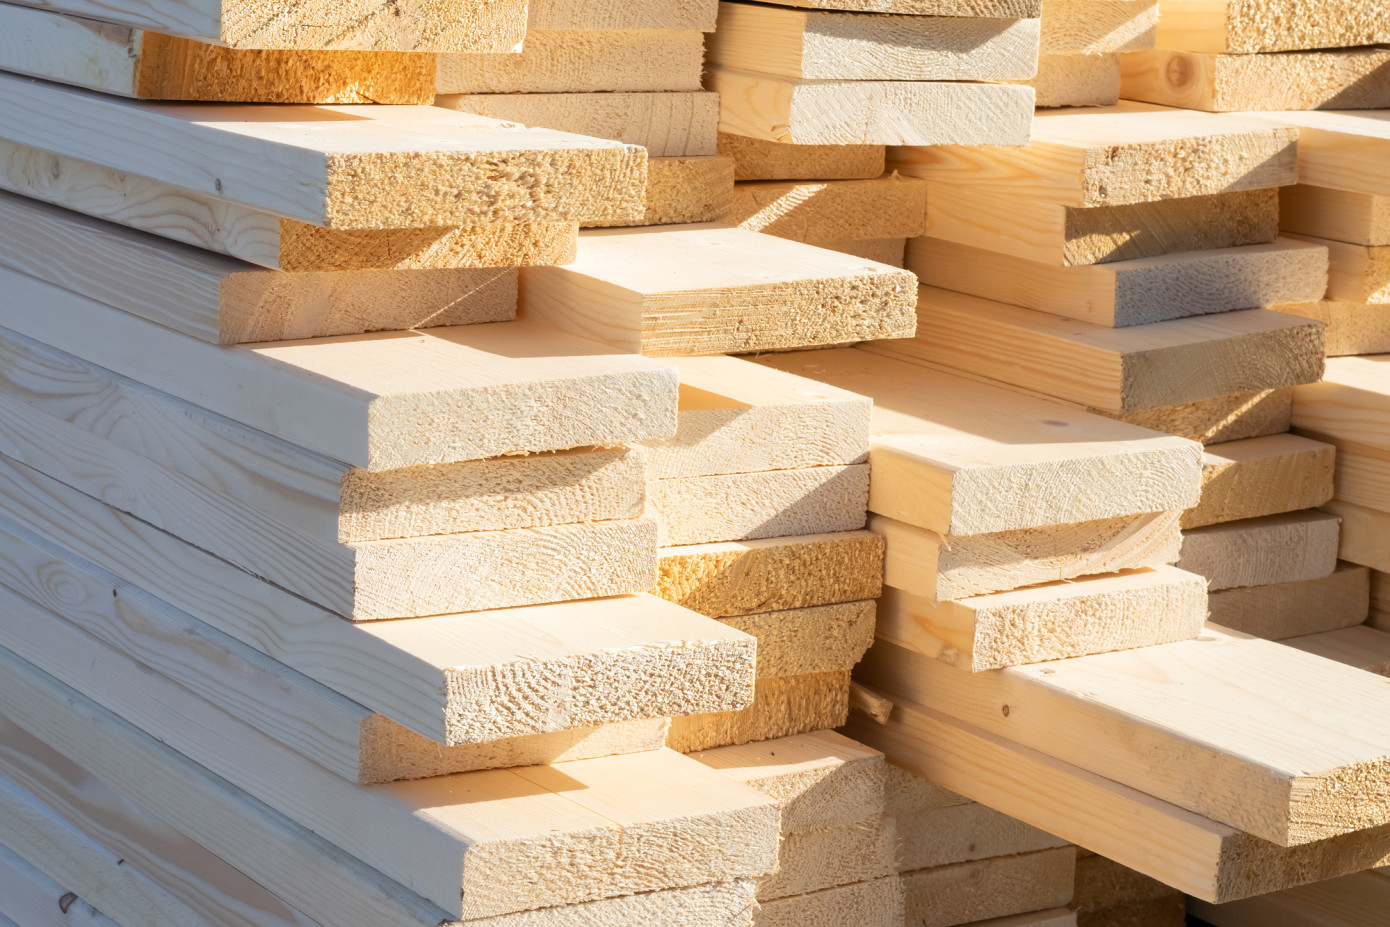 Brazilian export lumber price soars 28% in April